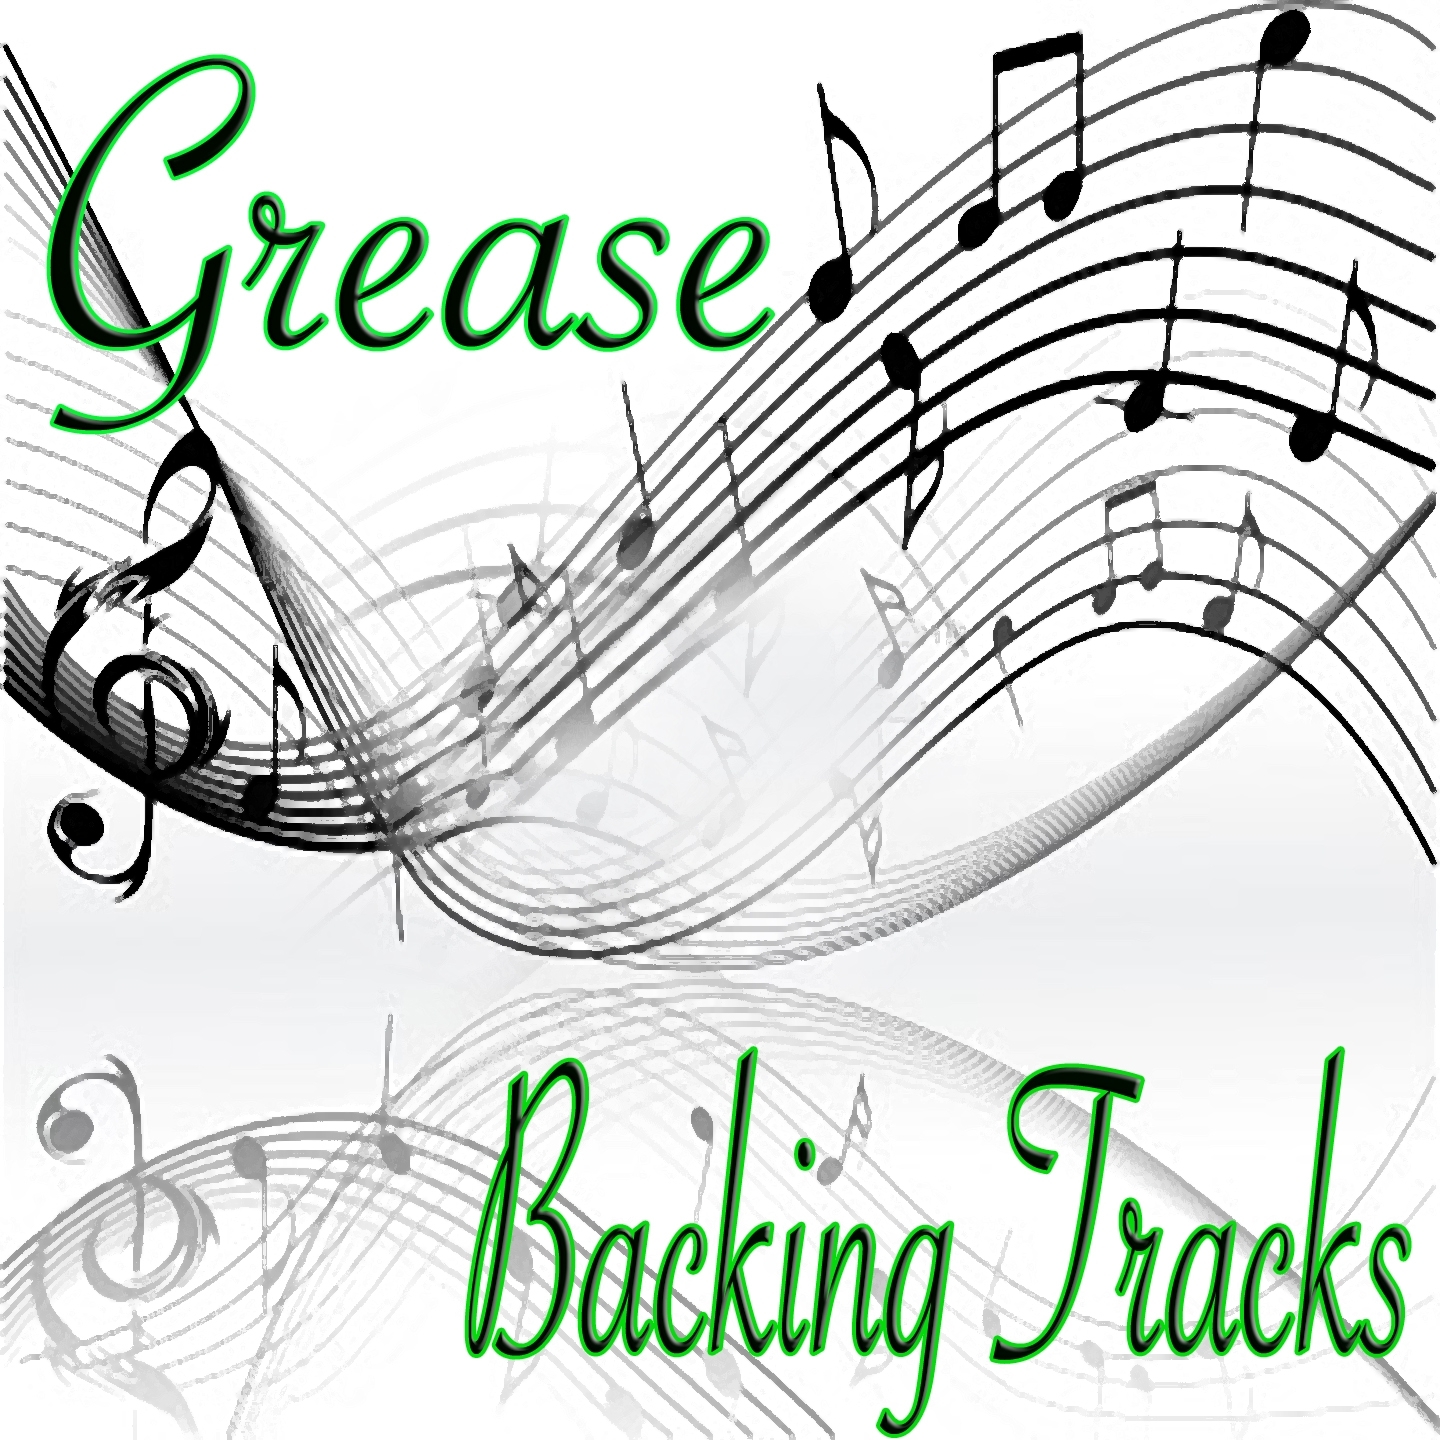 Grease Backing Tracks